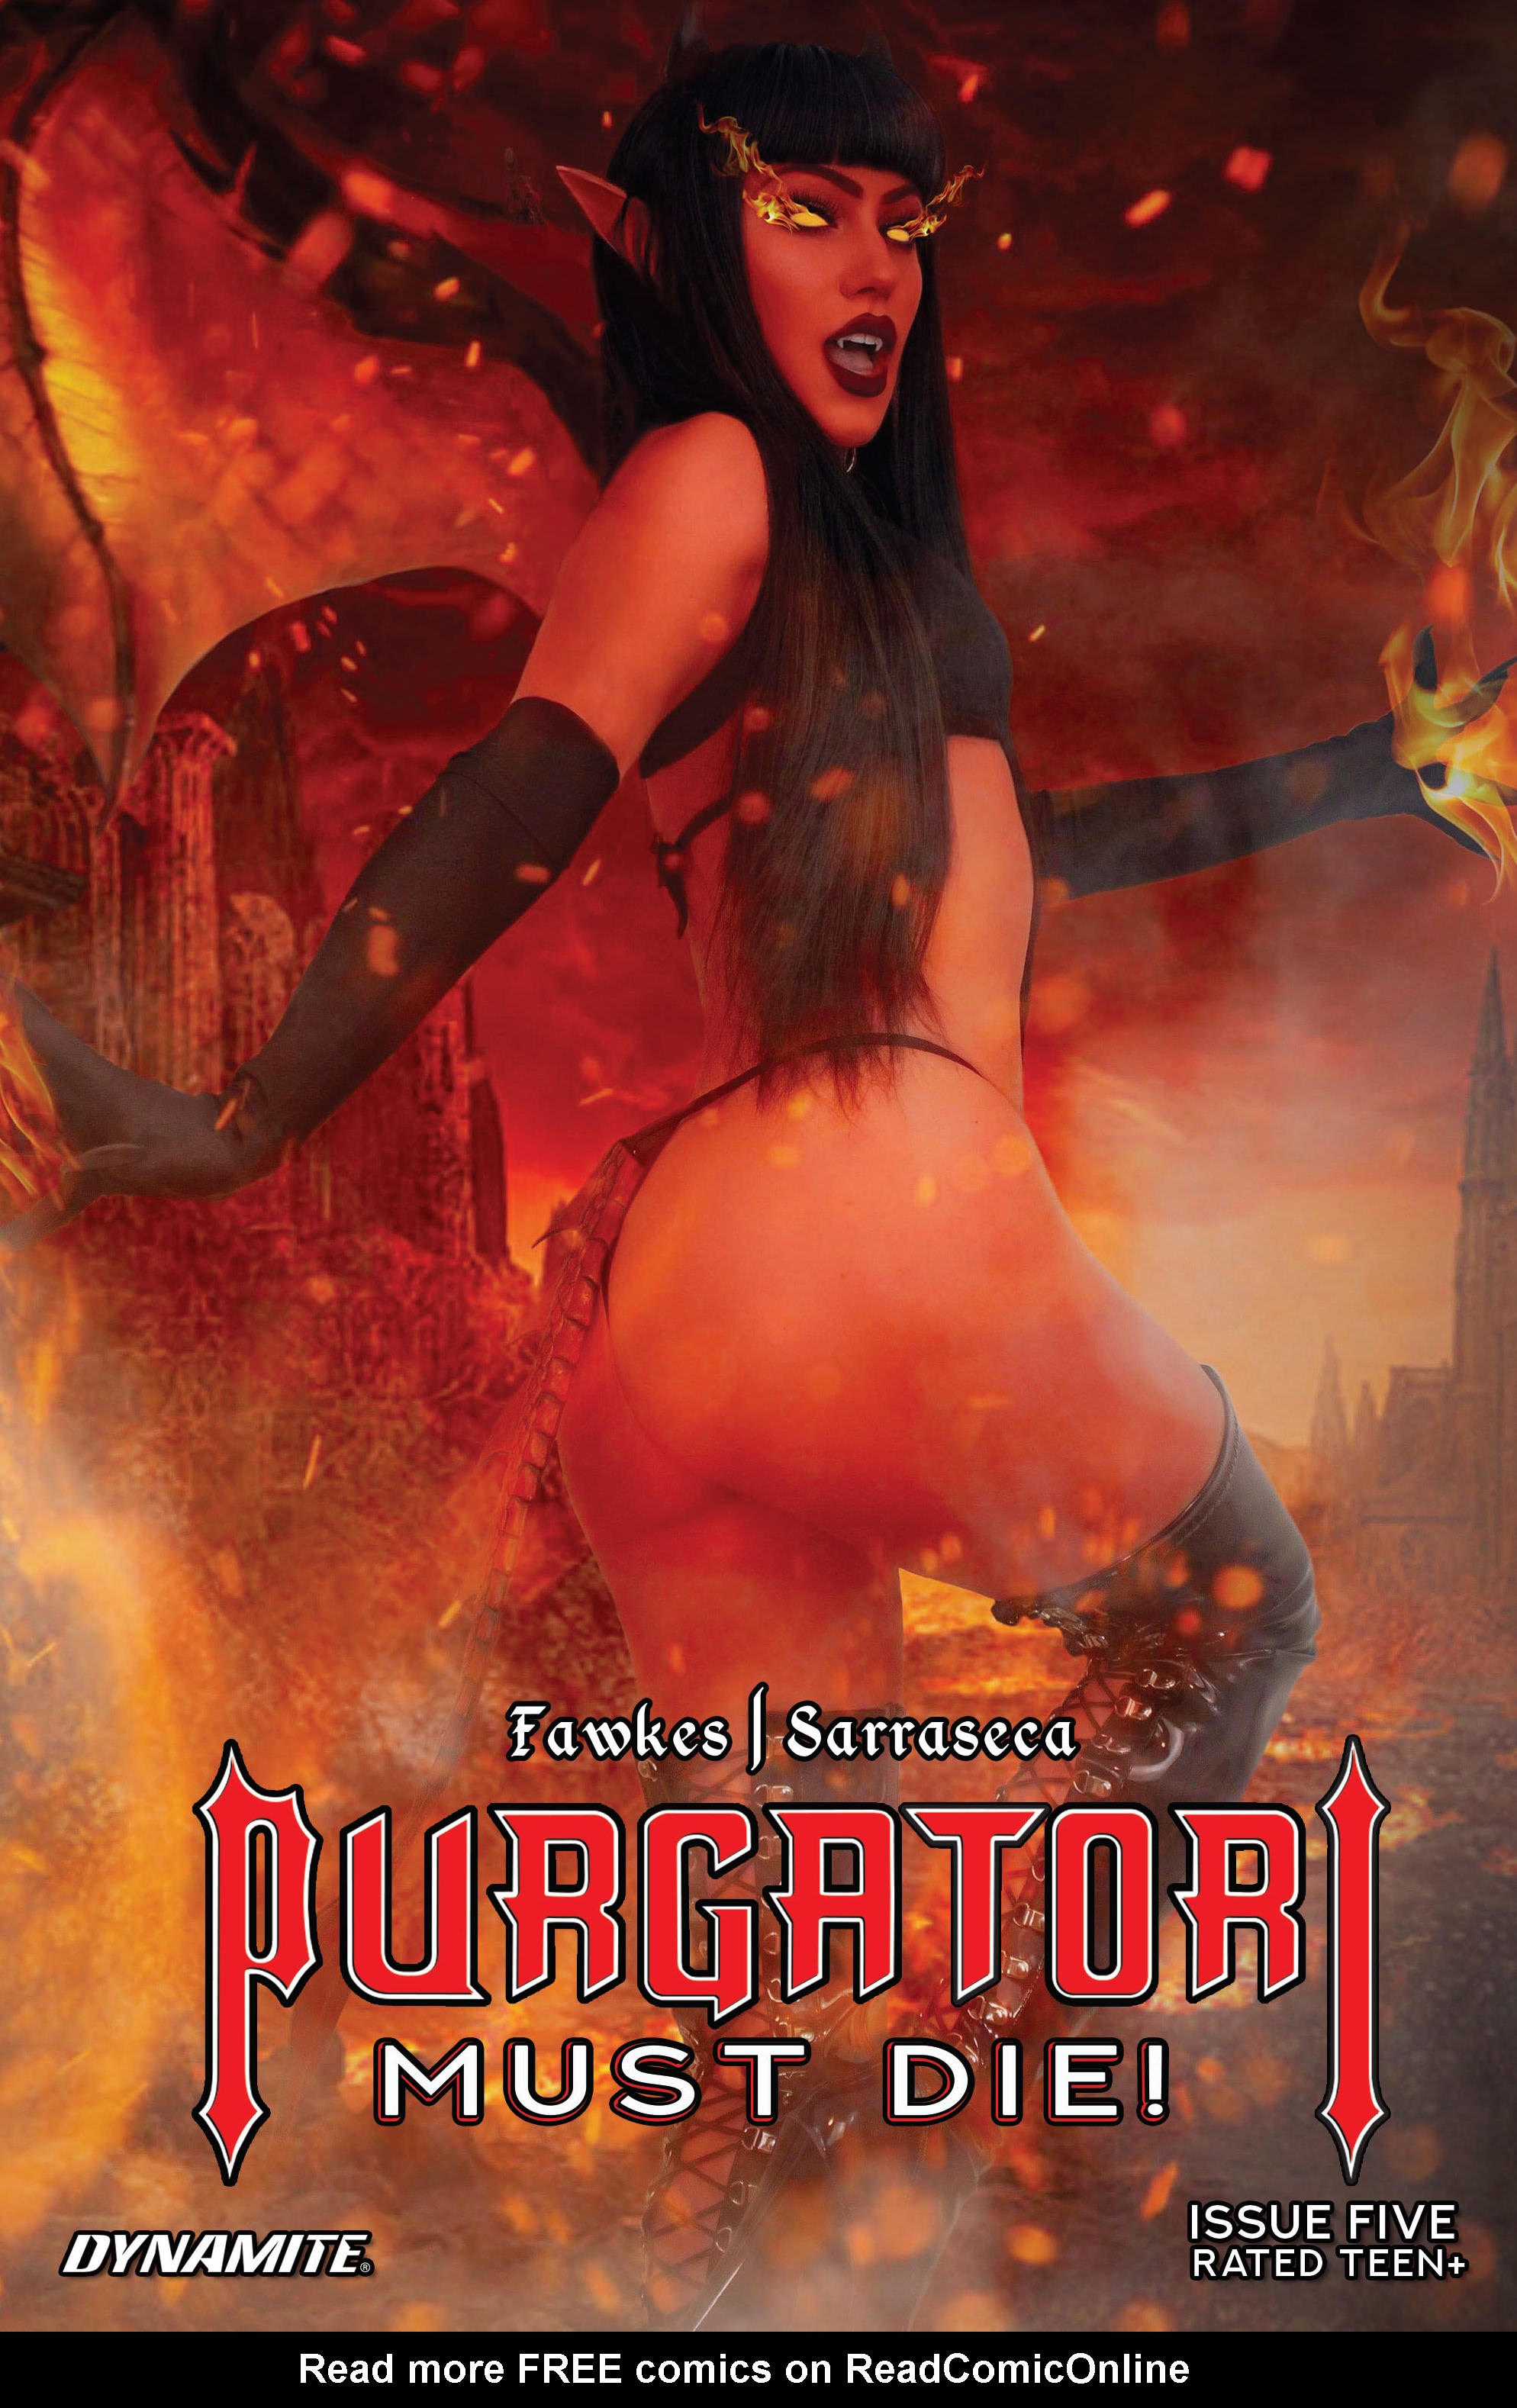 Read online Purgatori Must Die! comic -  Issue #5 - 5